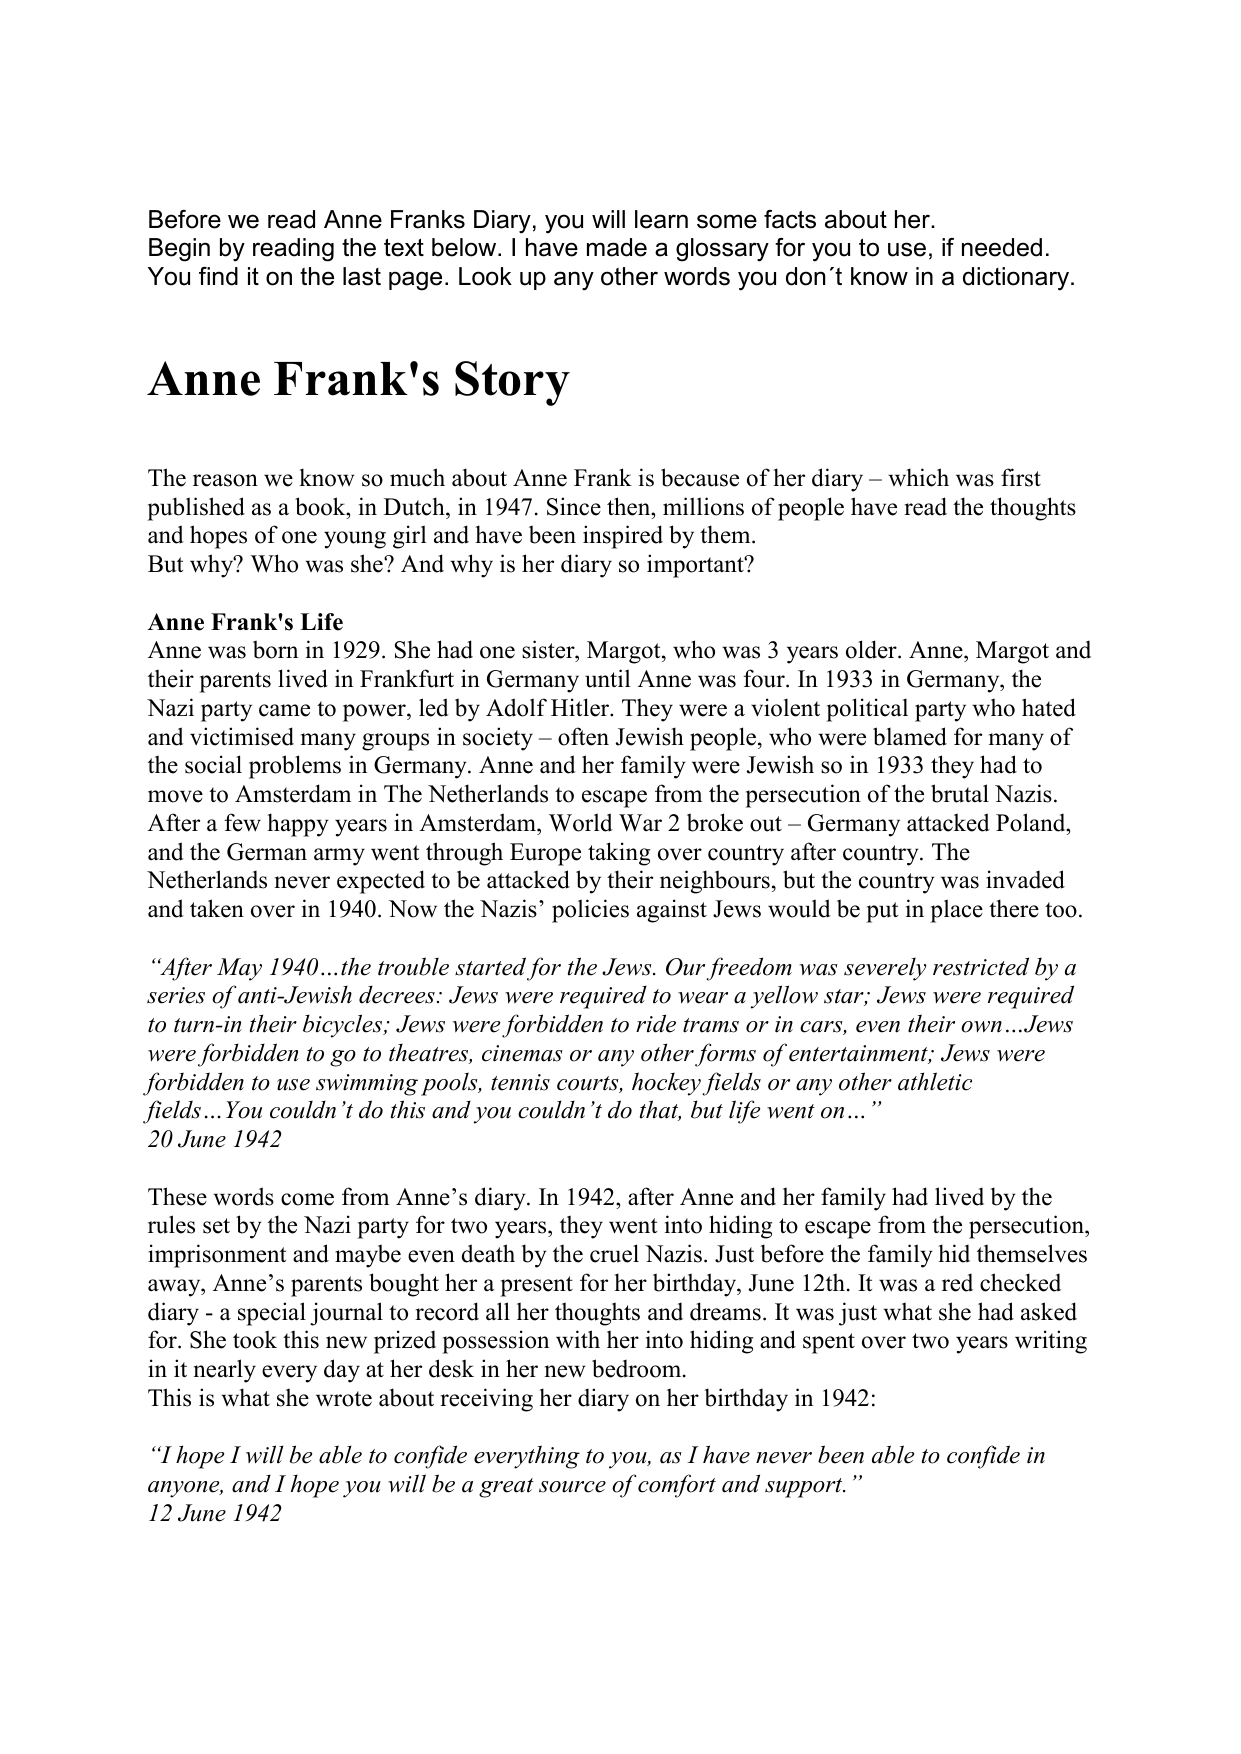 describe the three essays written by anne frank